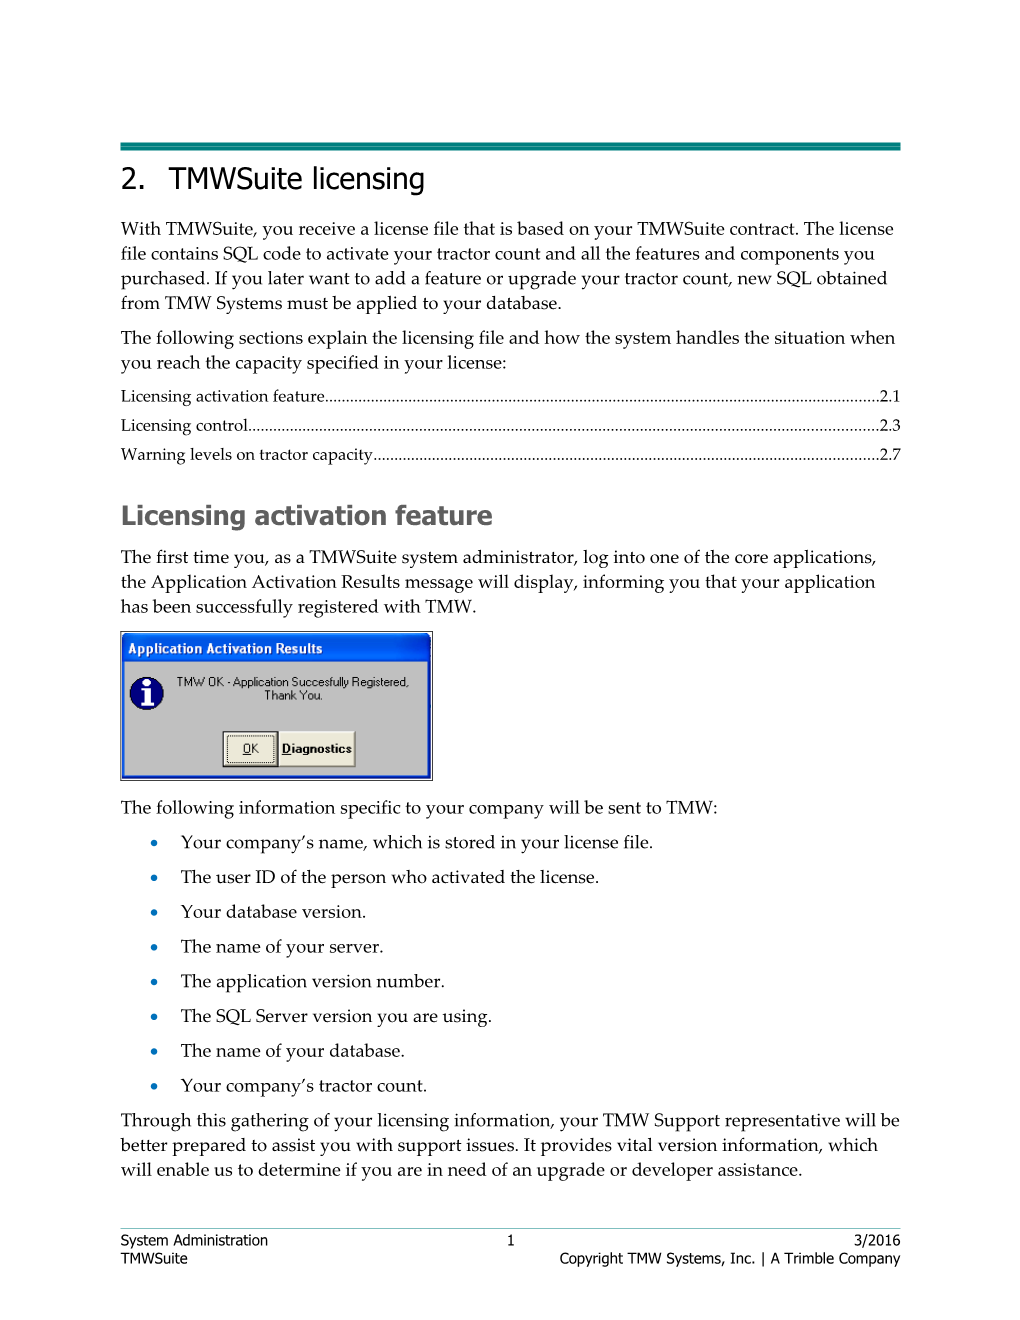 2. Tmwsuite Licensing